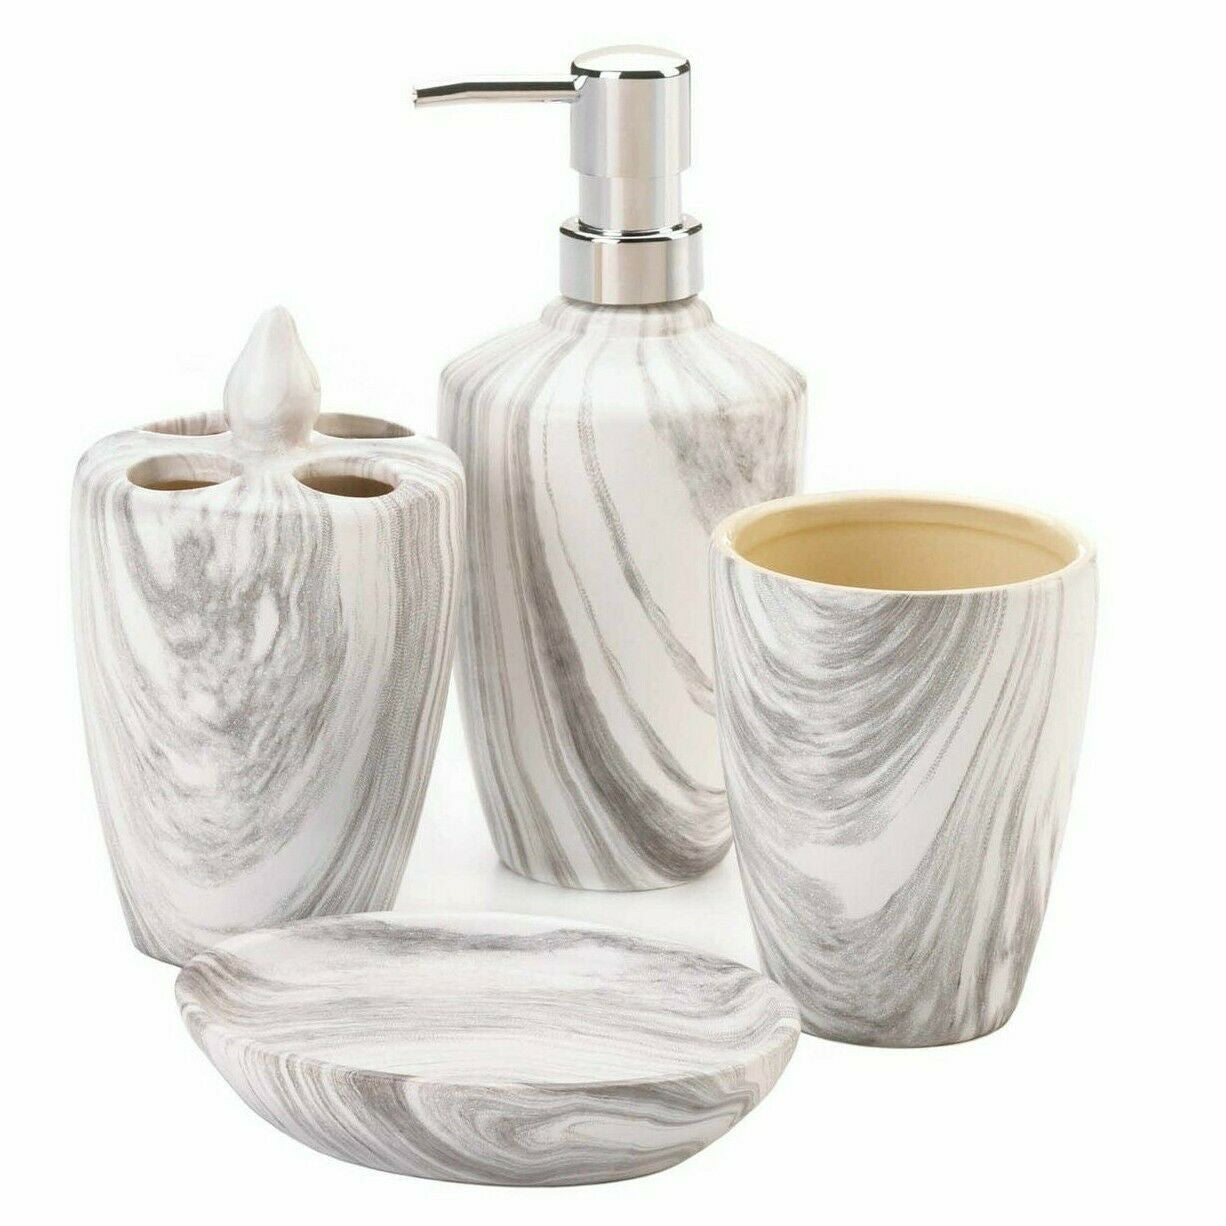 Gray Marble Porcelain Bath Accessory Set - Almondscove